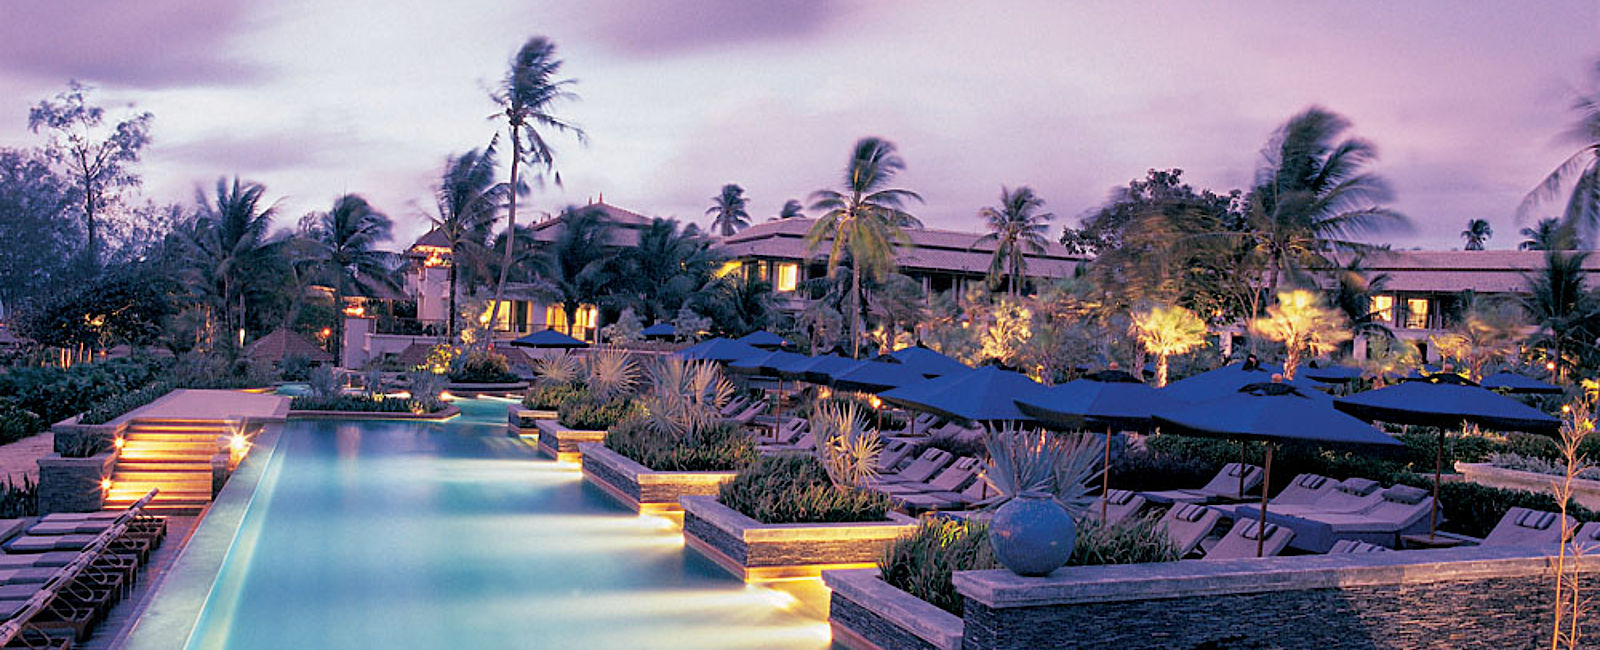 HOTELTEST
 JW Marriott Phuket Resort & Spa 
 Familienresort mit fantastischem Spa 